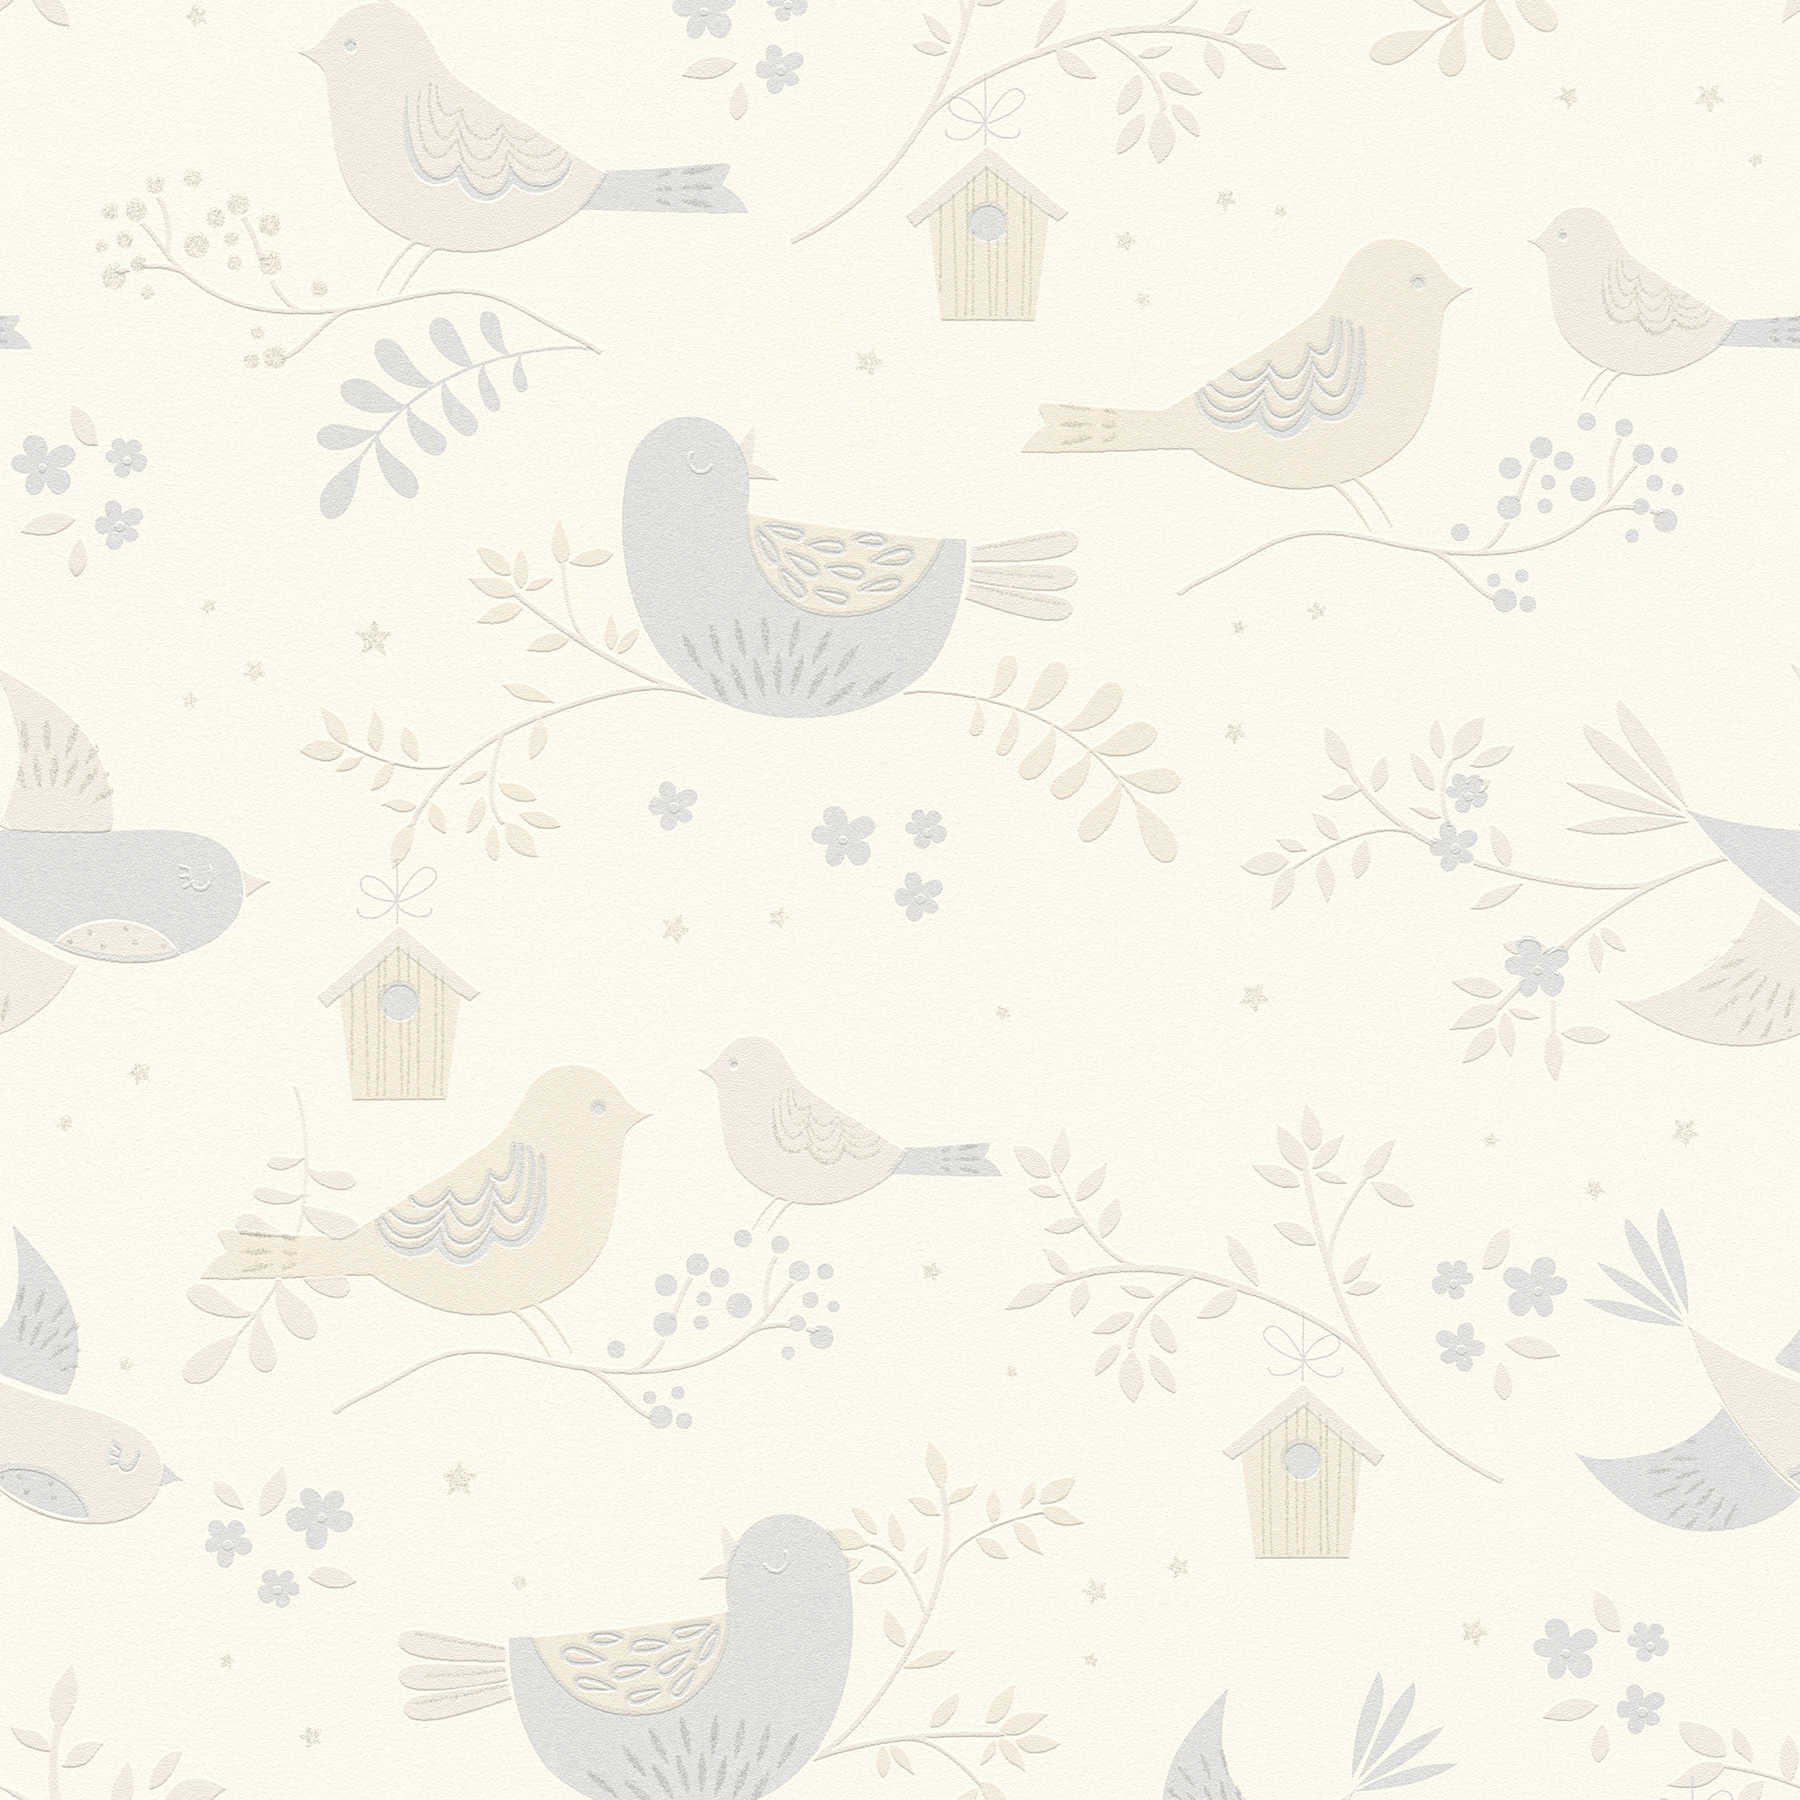         Wallpaper bird & floral pattern for baby room- Beige, Grey
    